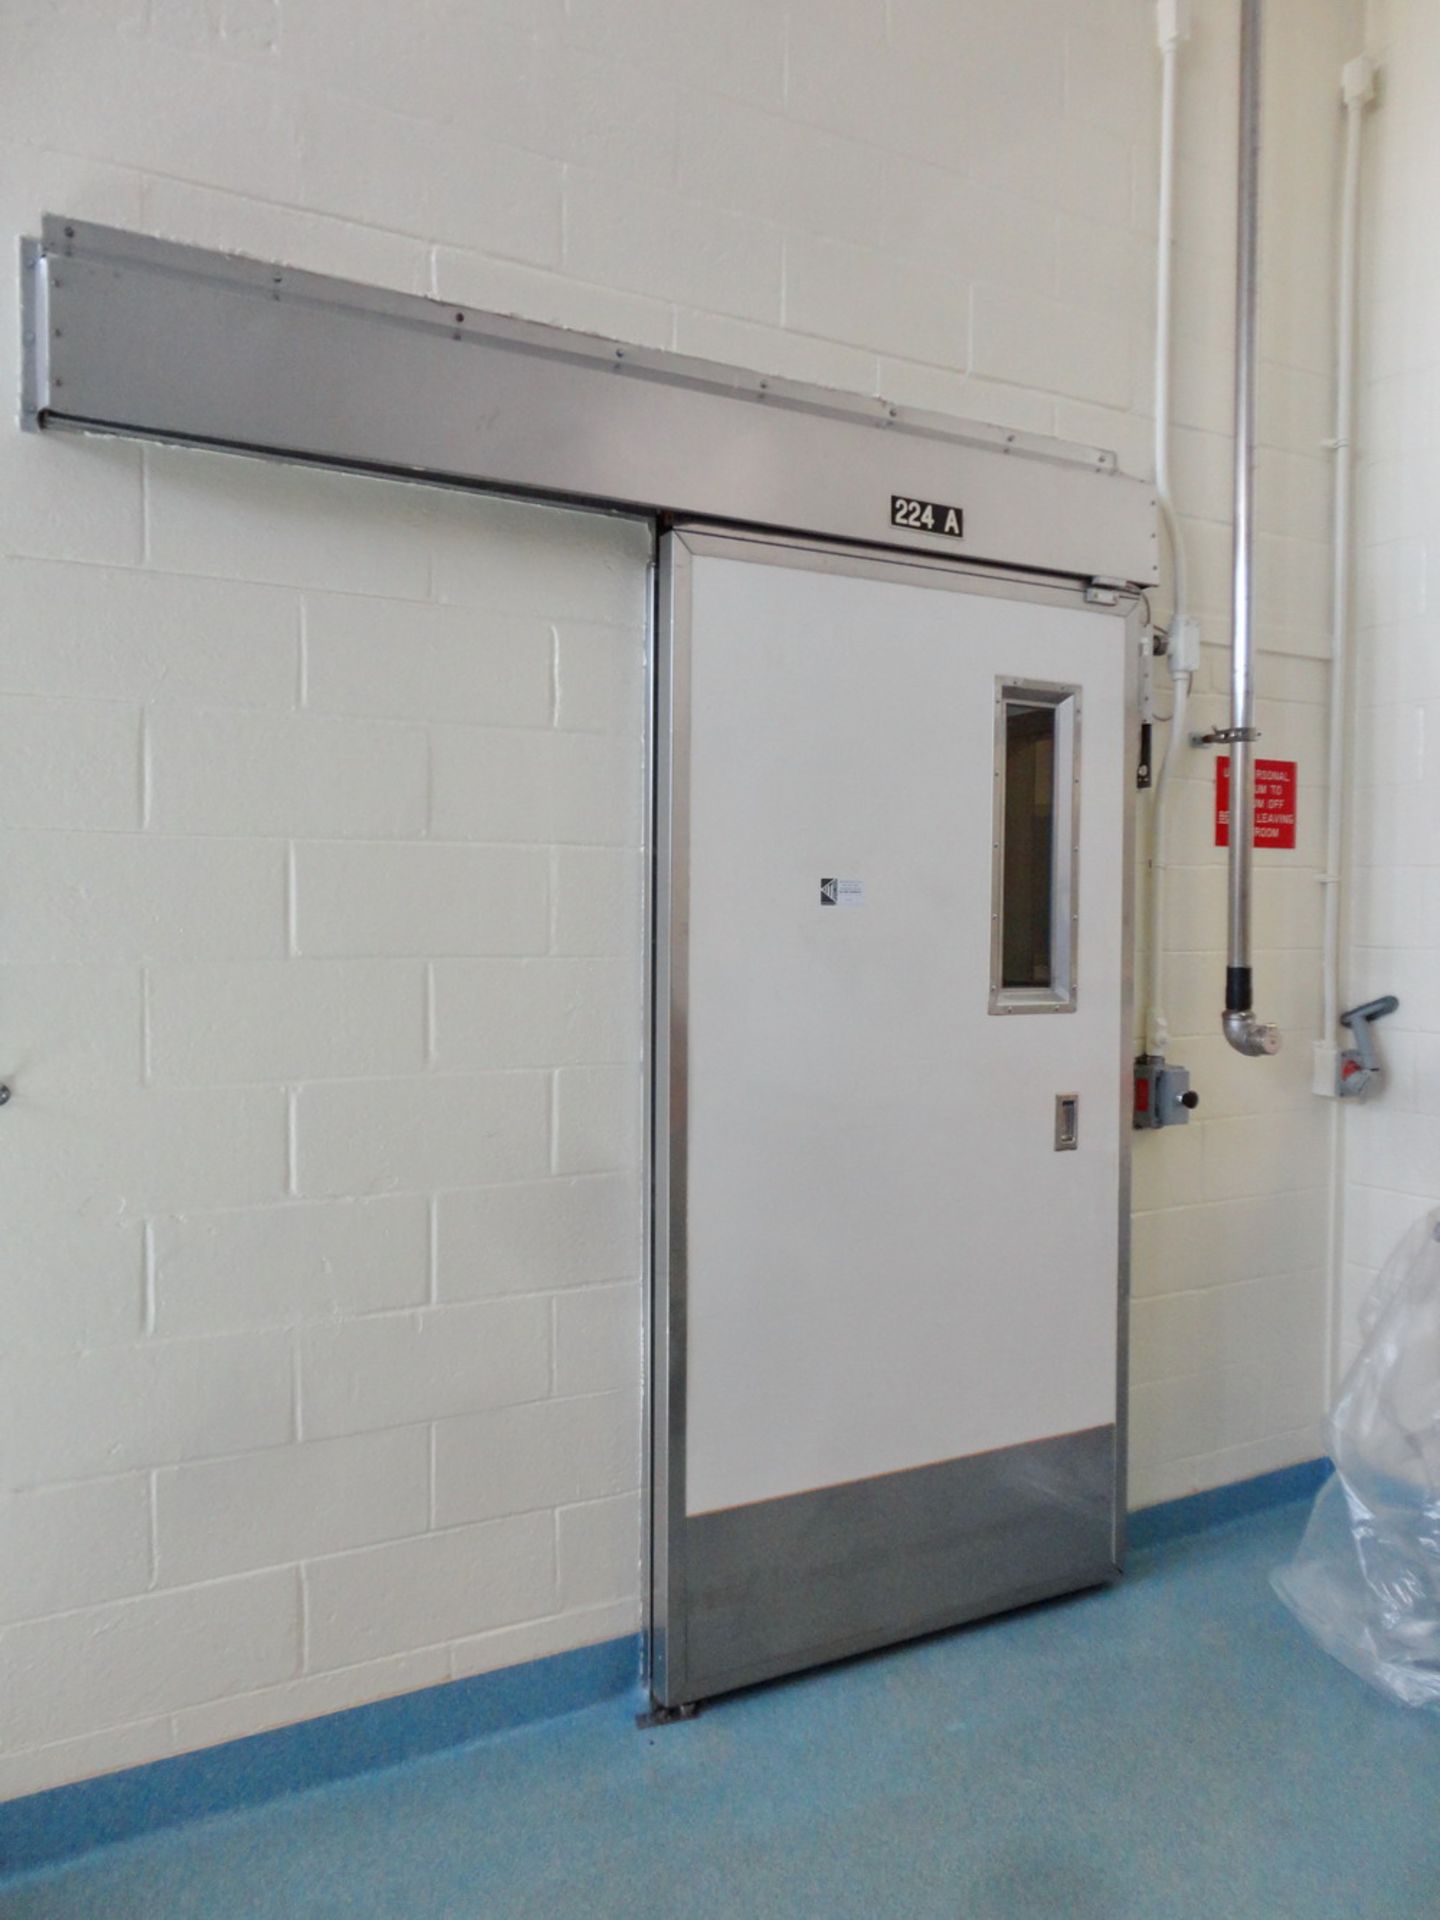 (1) Pharmaceutical Door, Manual Horizontal Sliding Single Panel Type, 44" wide panel, w/ window